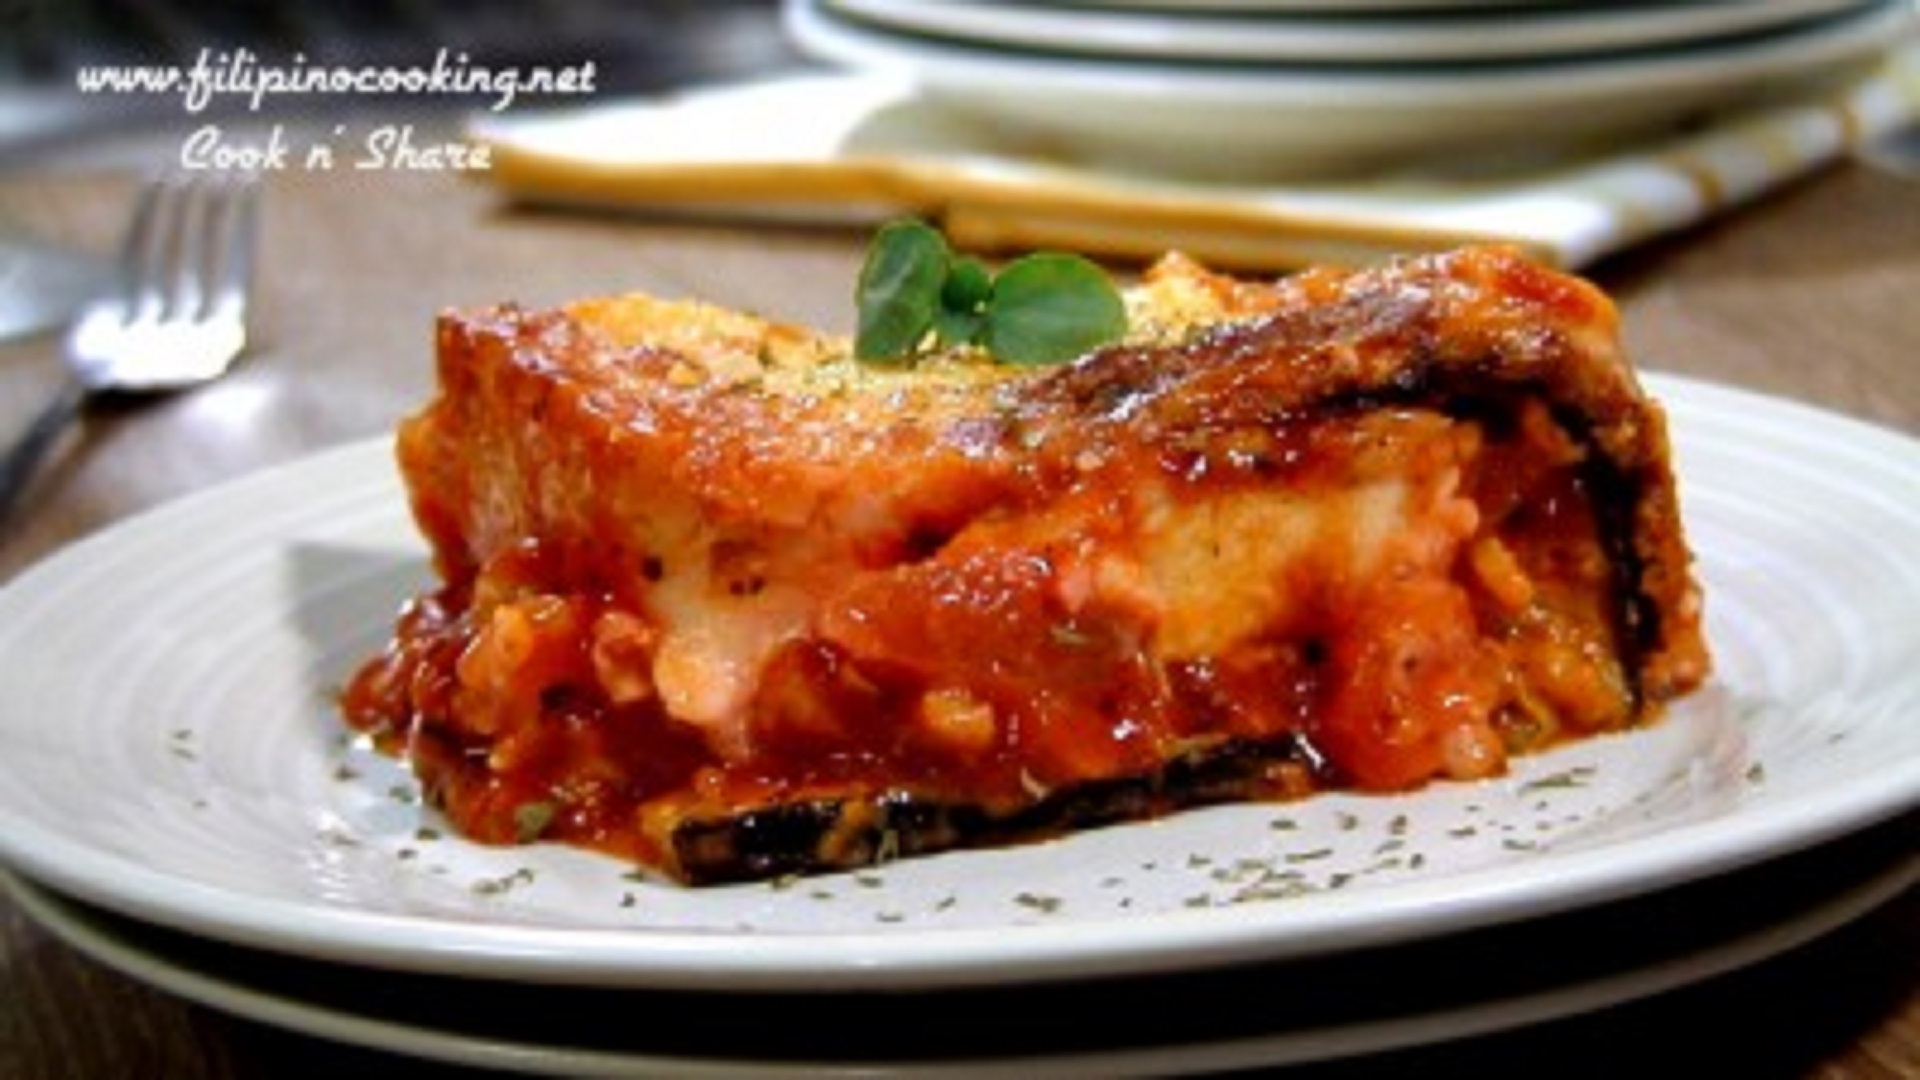 Eggplant Lasagna - Cook n' Share - World Cuisines